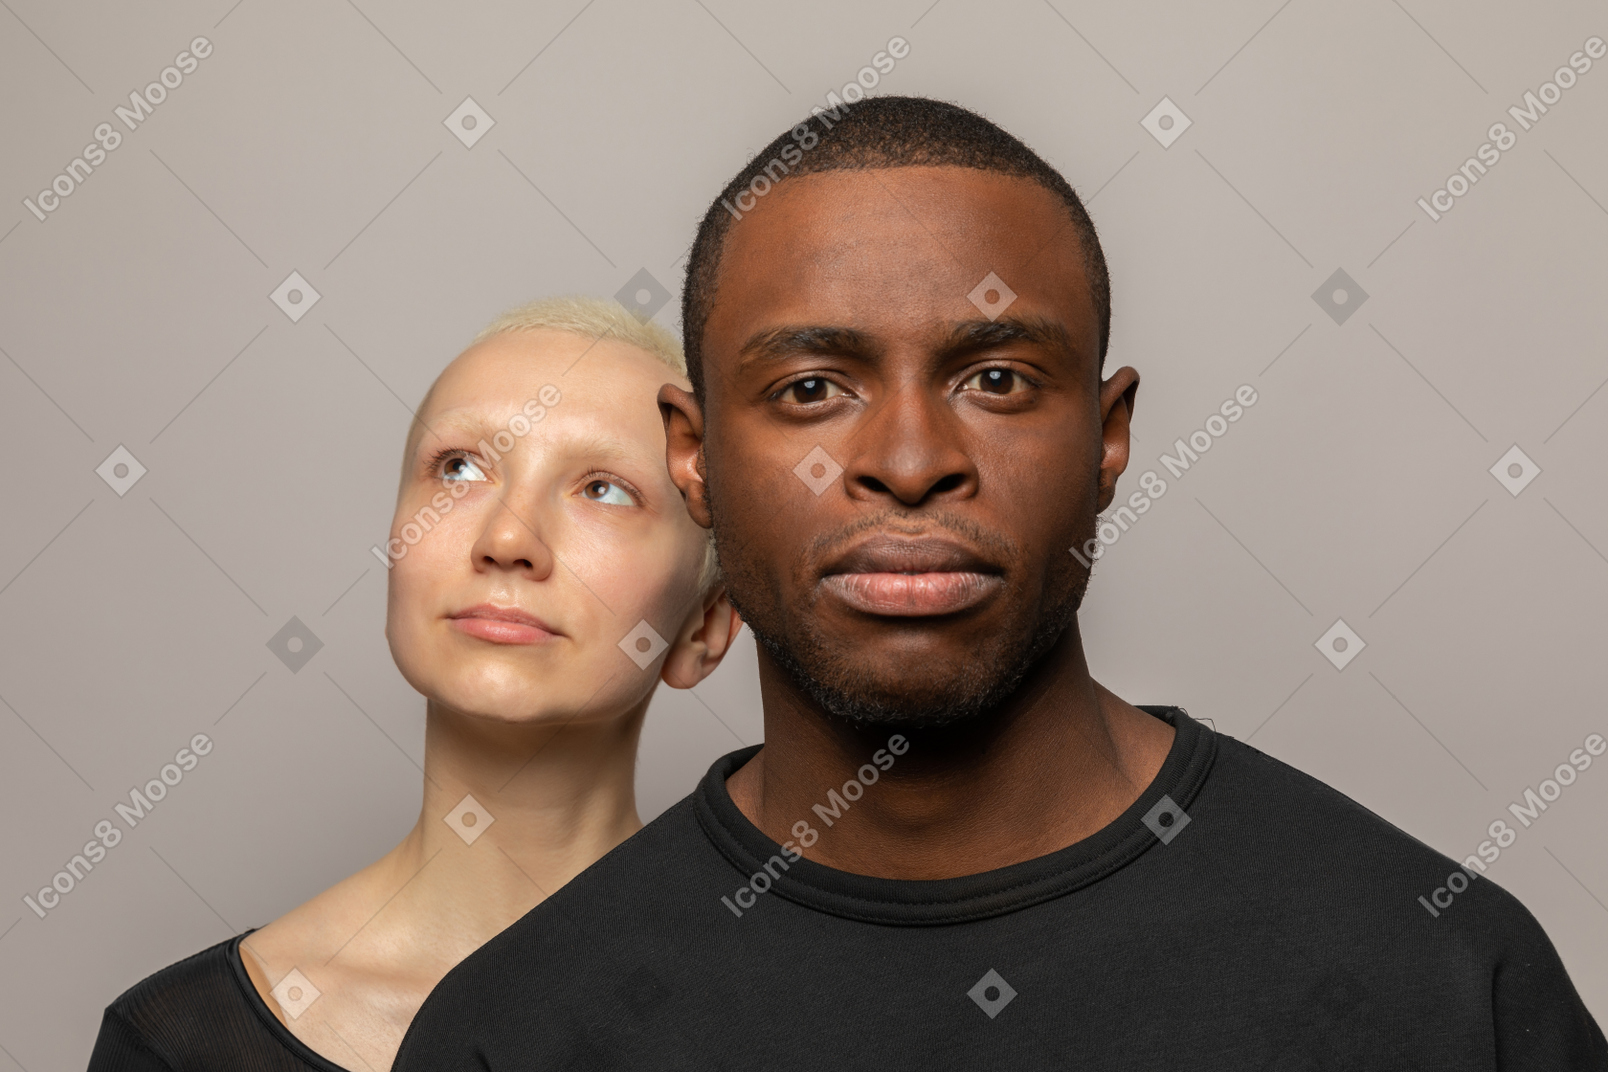 Young woman behind man looking up